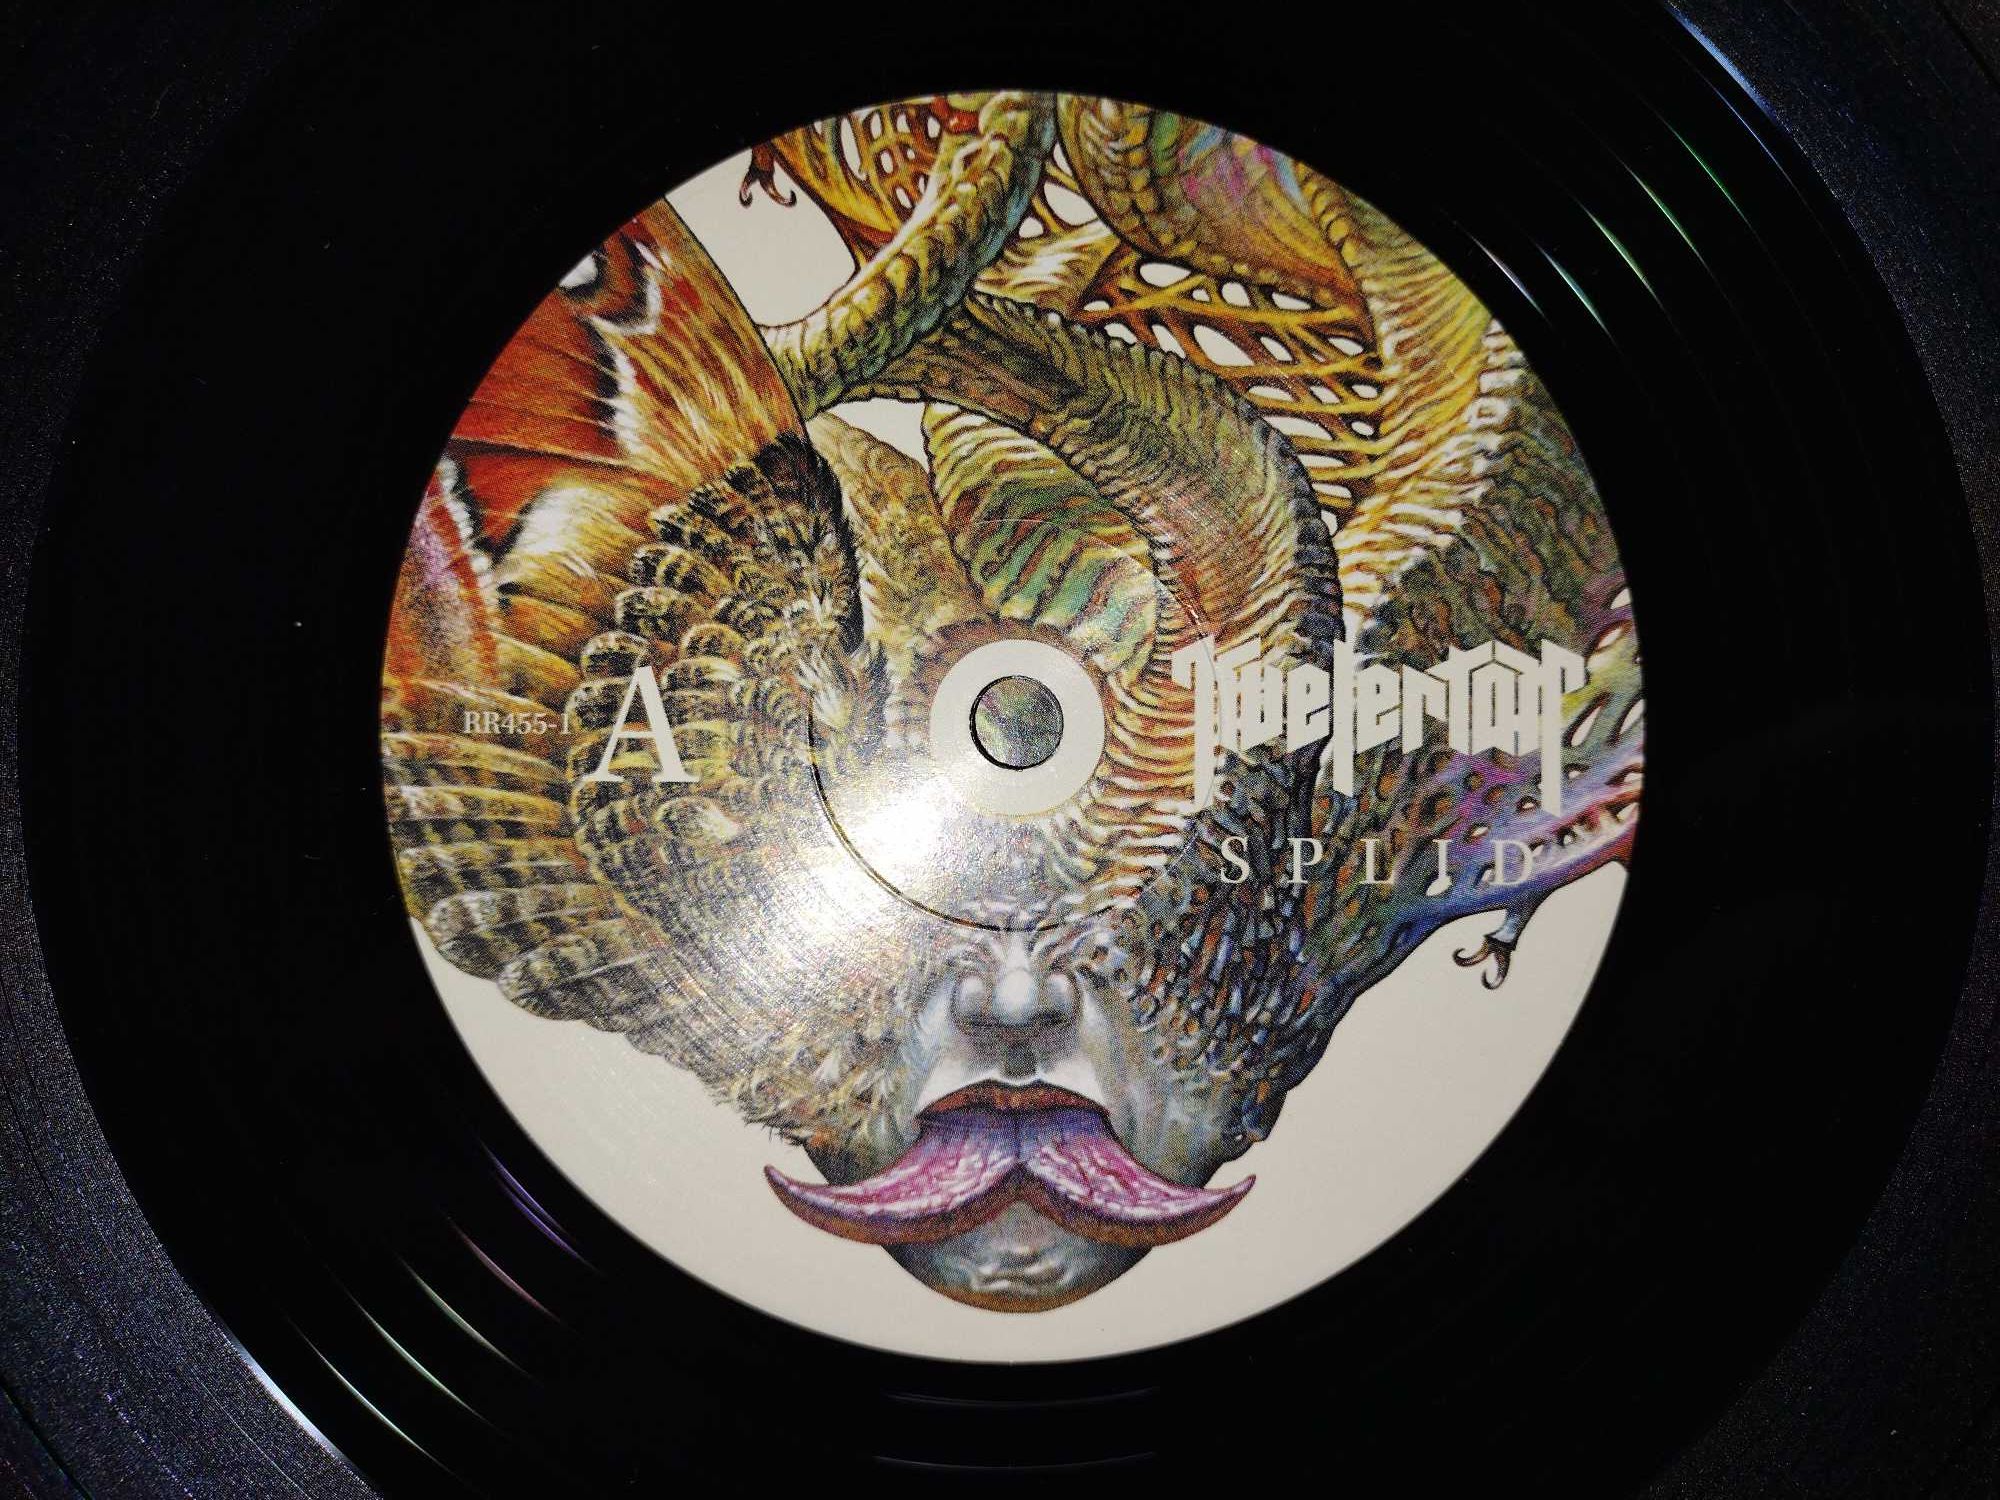 Kvelertak – Splid (Rise Records, EU 2020)